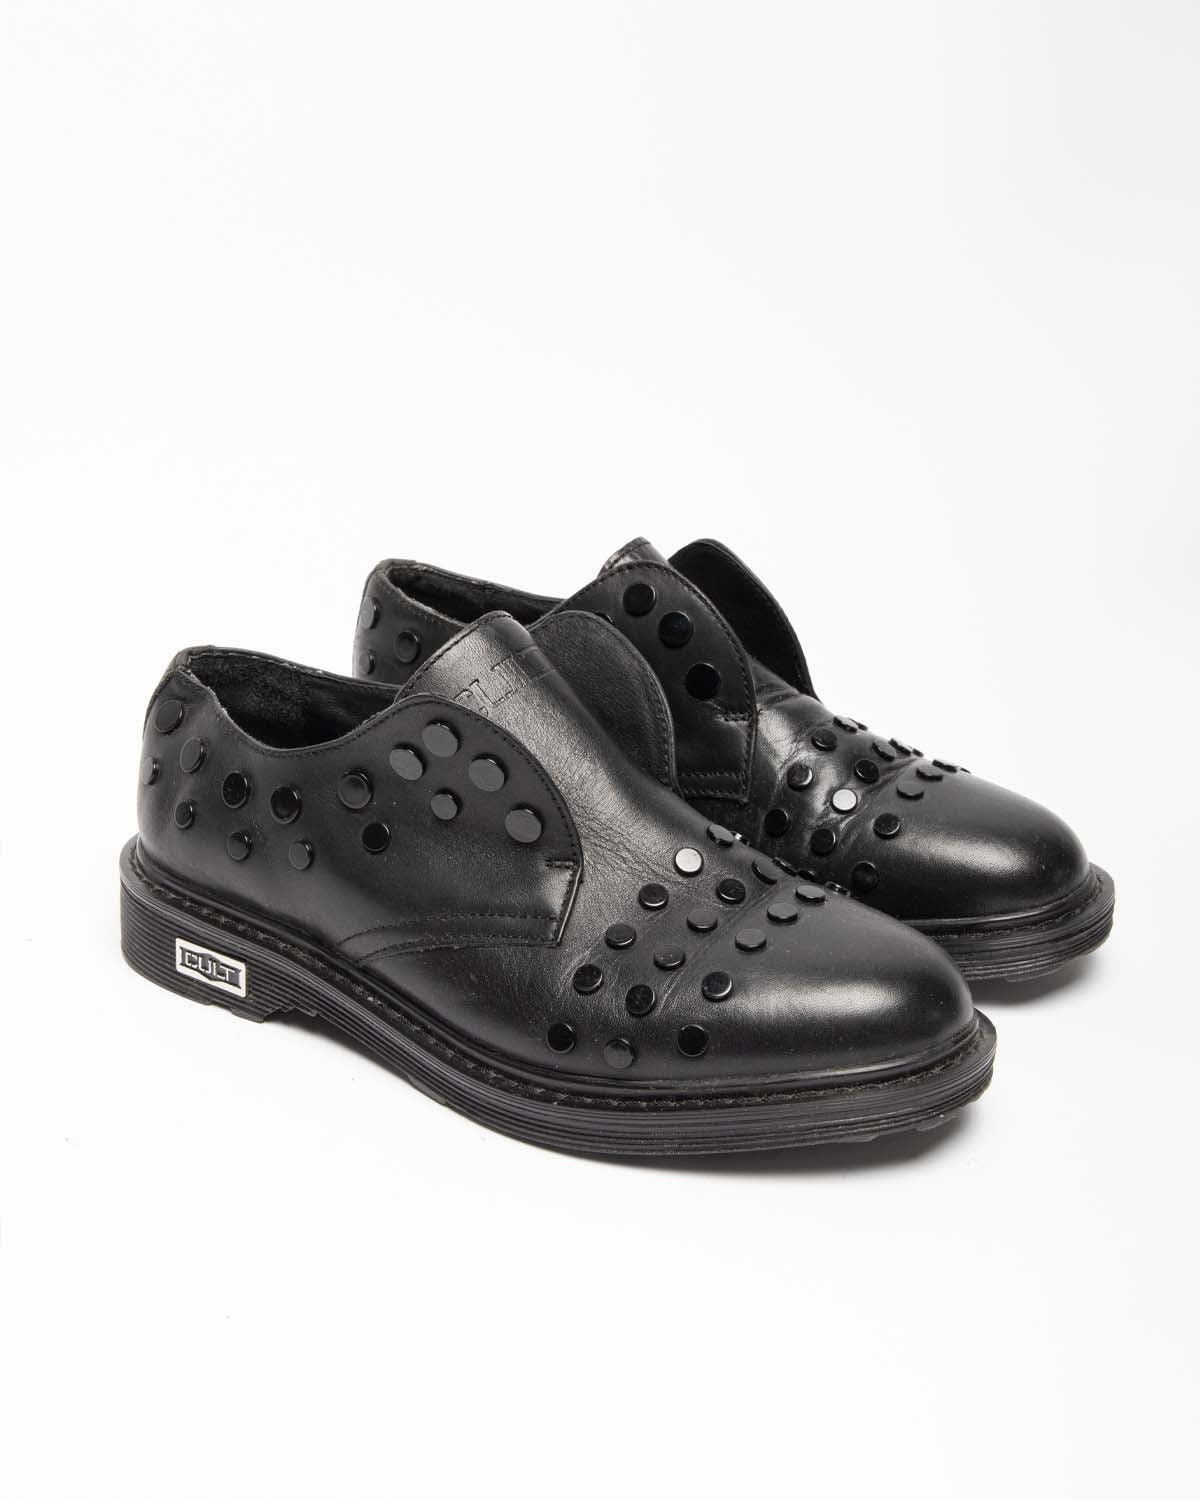 CULT BLACK LEATHER Studded Slip-on Shoes